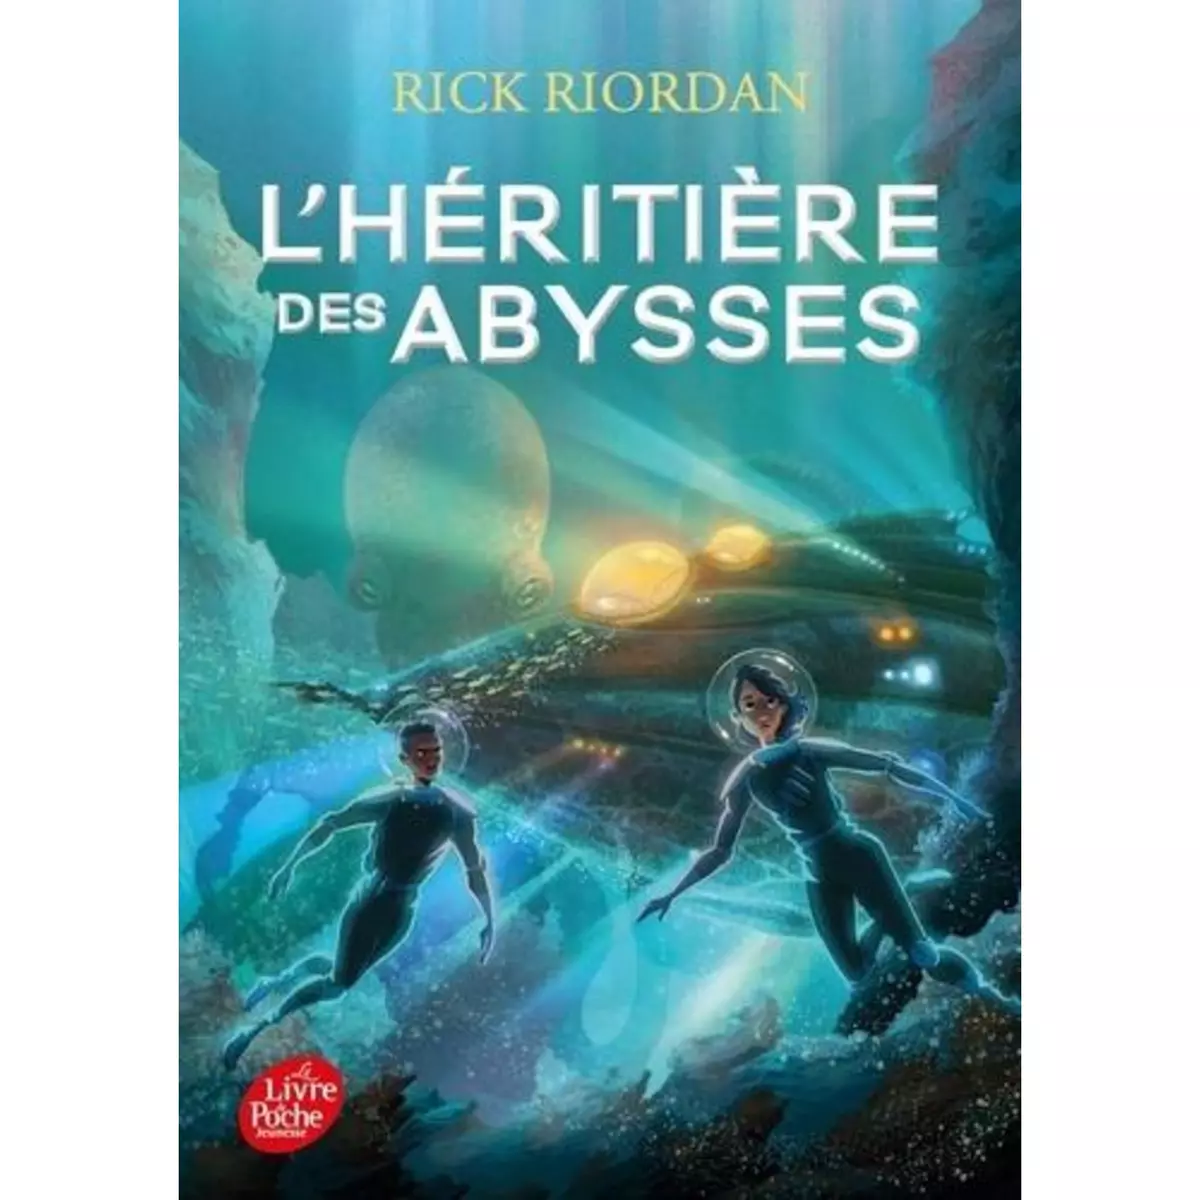  L'HERITIERE DES ABYSSES, Riordan Rick